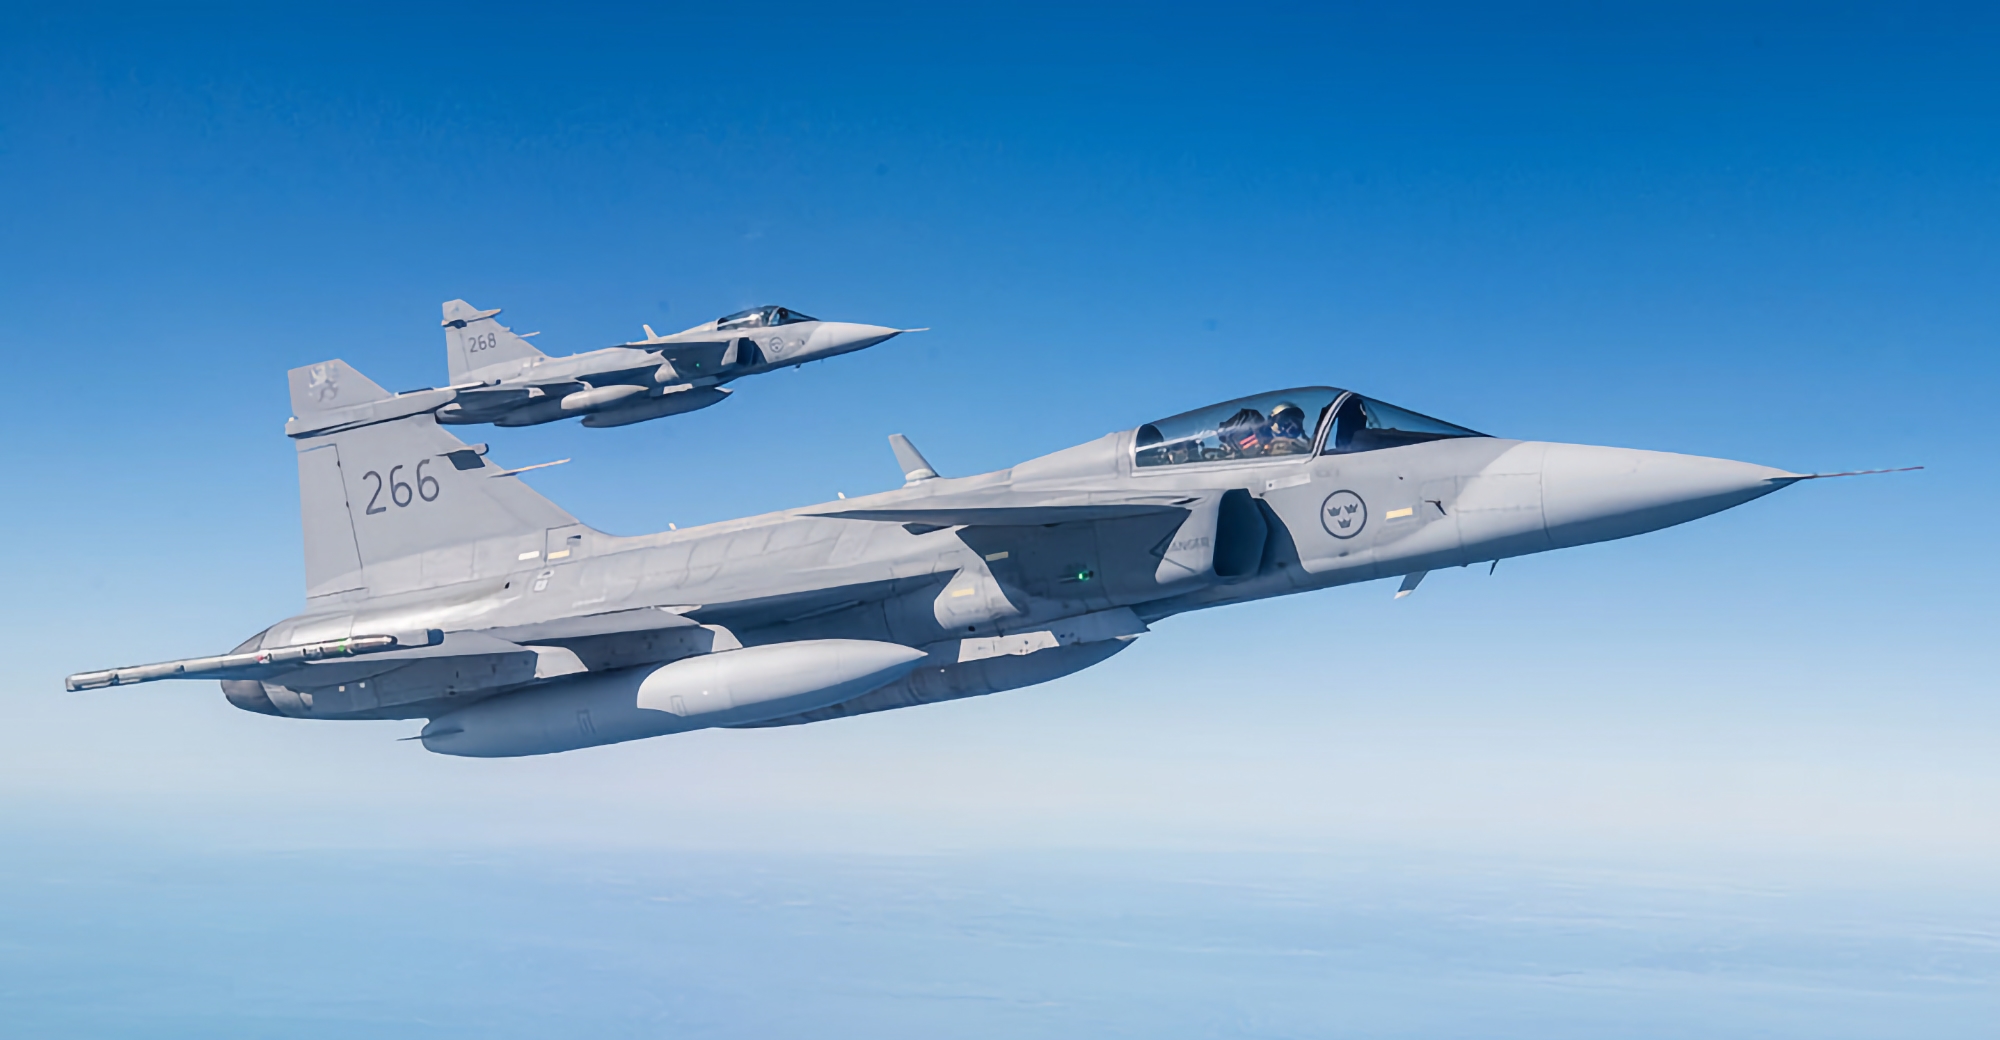 Sweden considers transferring Gripen fighter jets to Ukraine